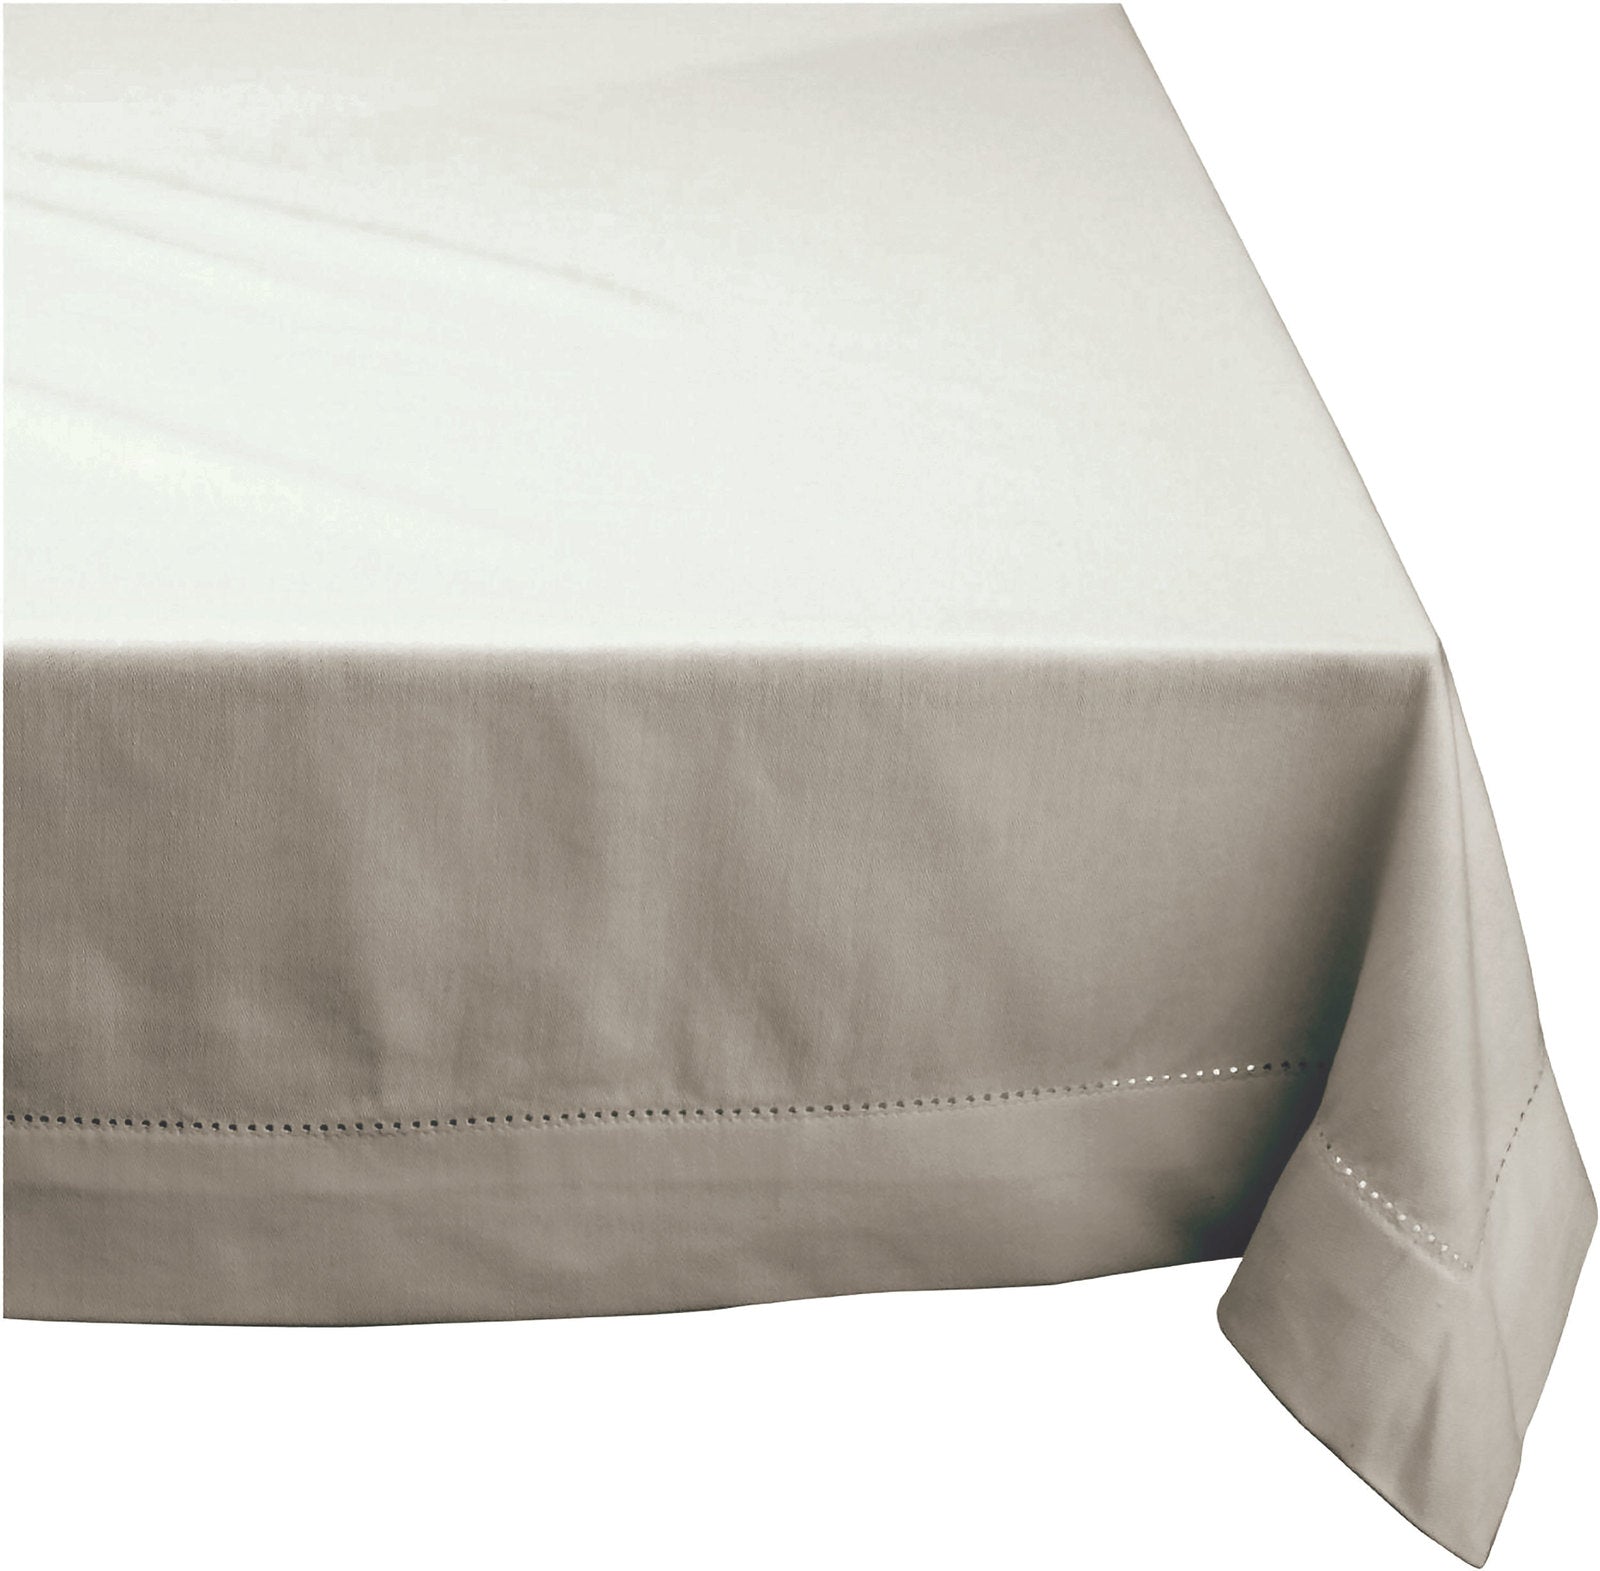 Elegant Hemstitch Tablecloth - 100% Cotton 205cm x 205cm in White